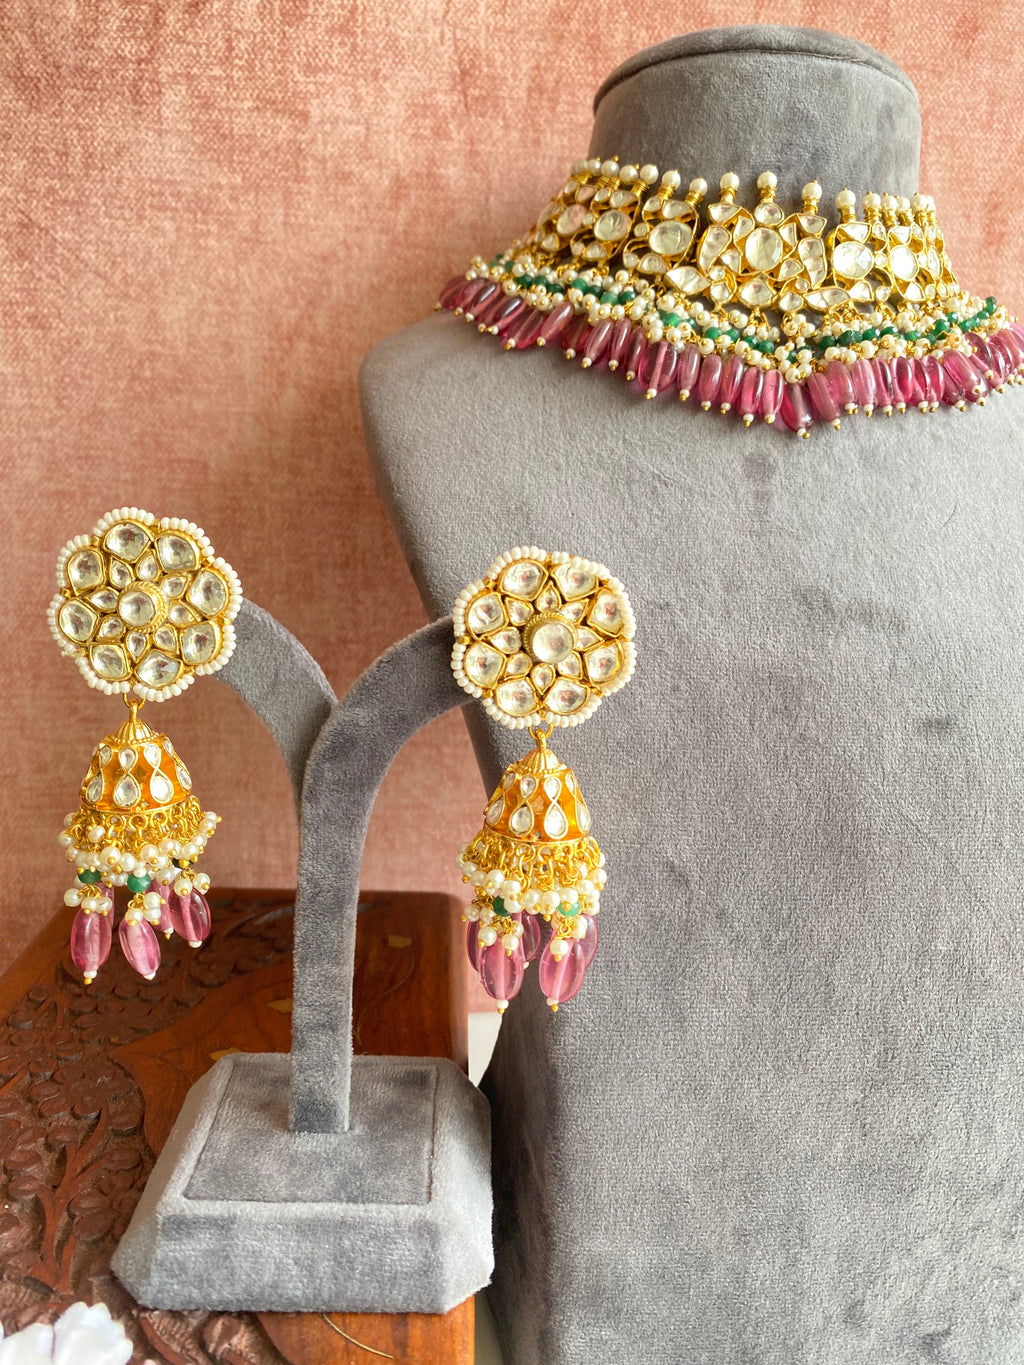 Kundan necklace set with pink drops and earrings – Masayaa